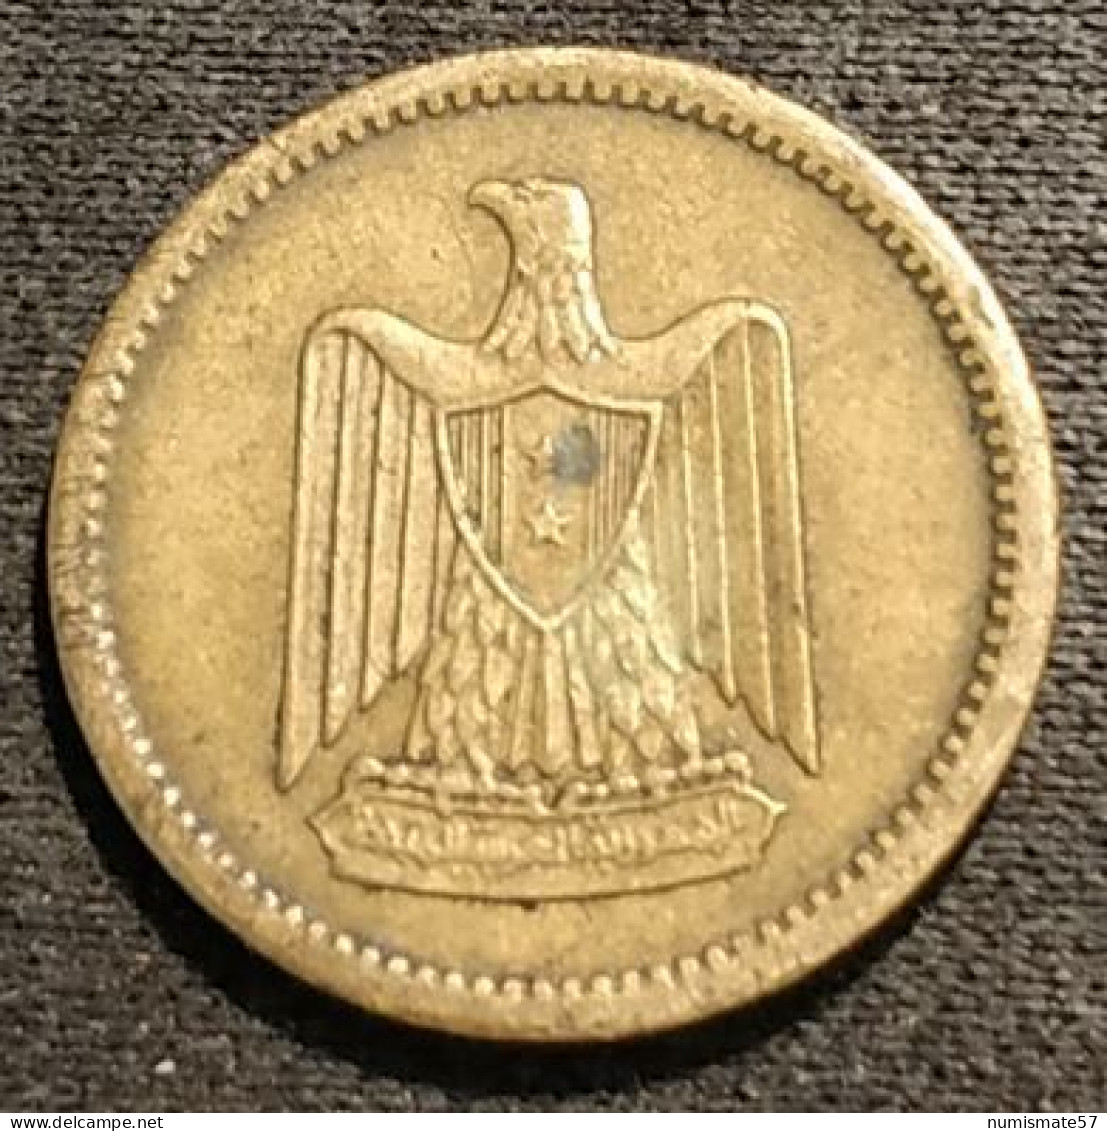 Pas Courant - EGYPTE - EGYPT - 1 MILLIEME 1960 ( 1380 ) - KM 393 - Egypte